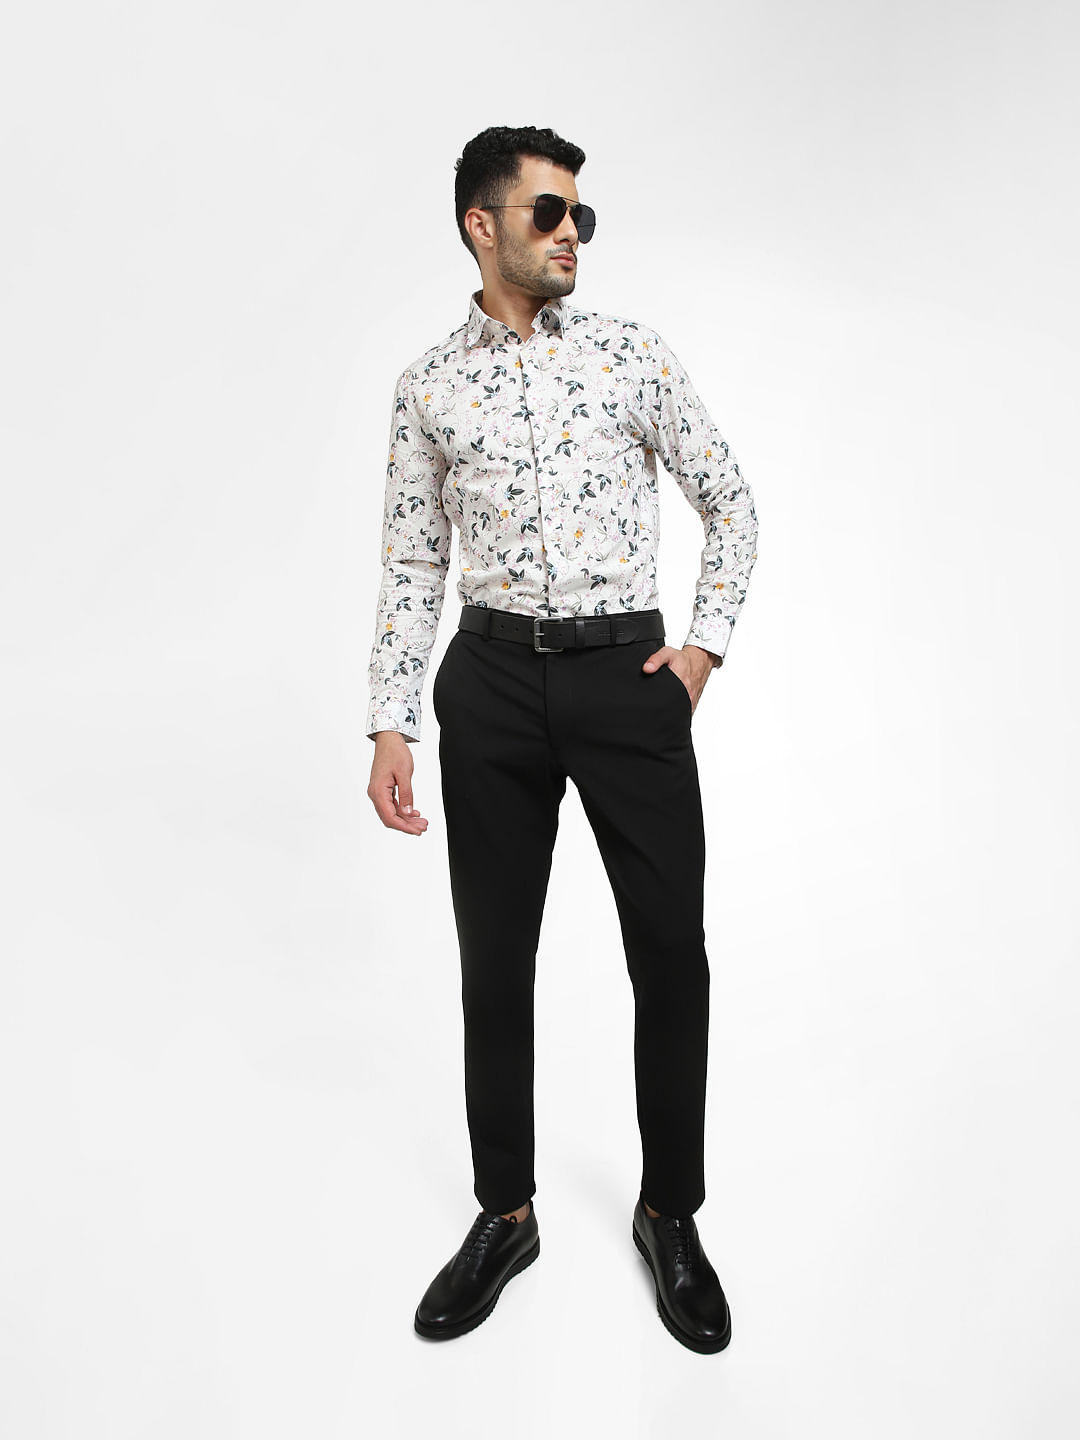 VAN HEUSEN Slim Fit Men Brown Trousers - Buy VAN HEUSEN Slim Fit Men Brown  Trousers Online at Best Prices in India | Flipkart.com